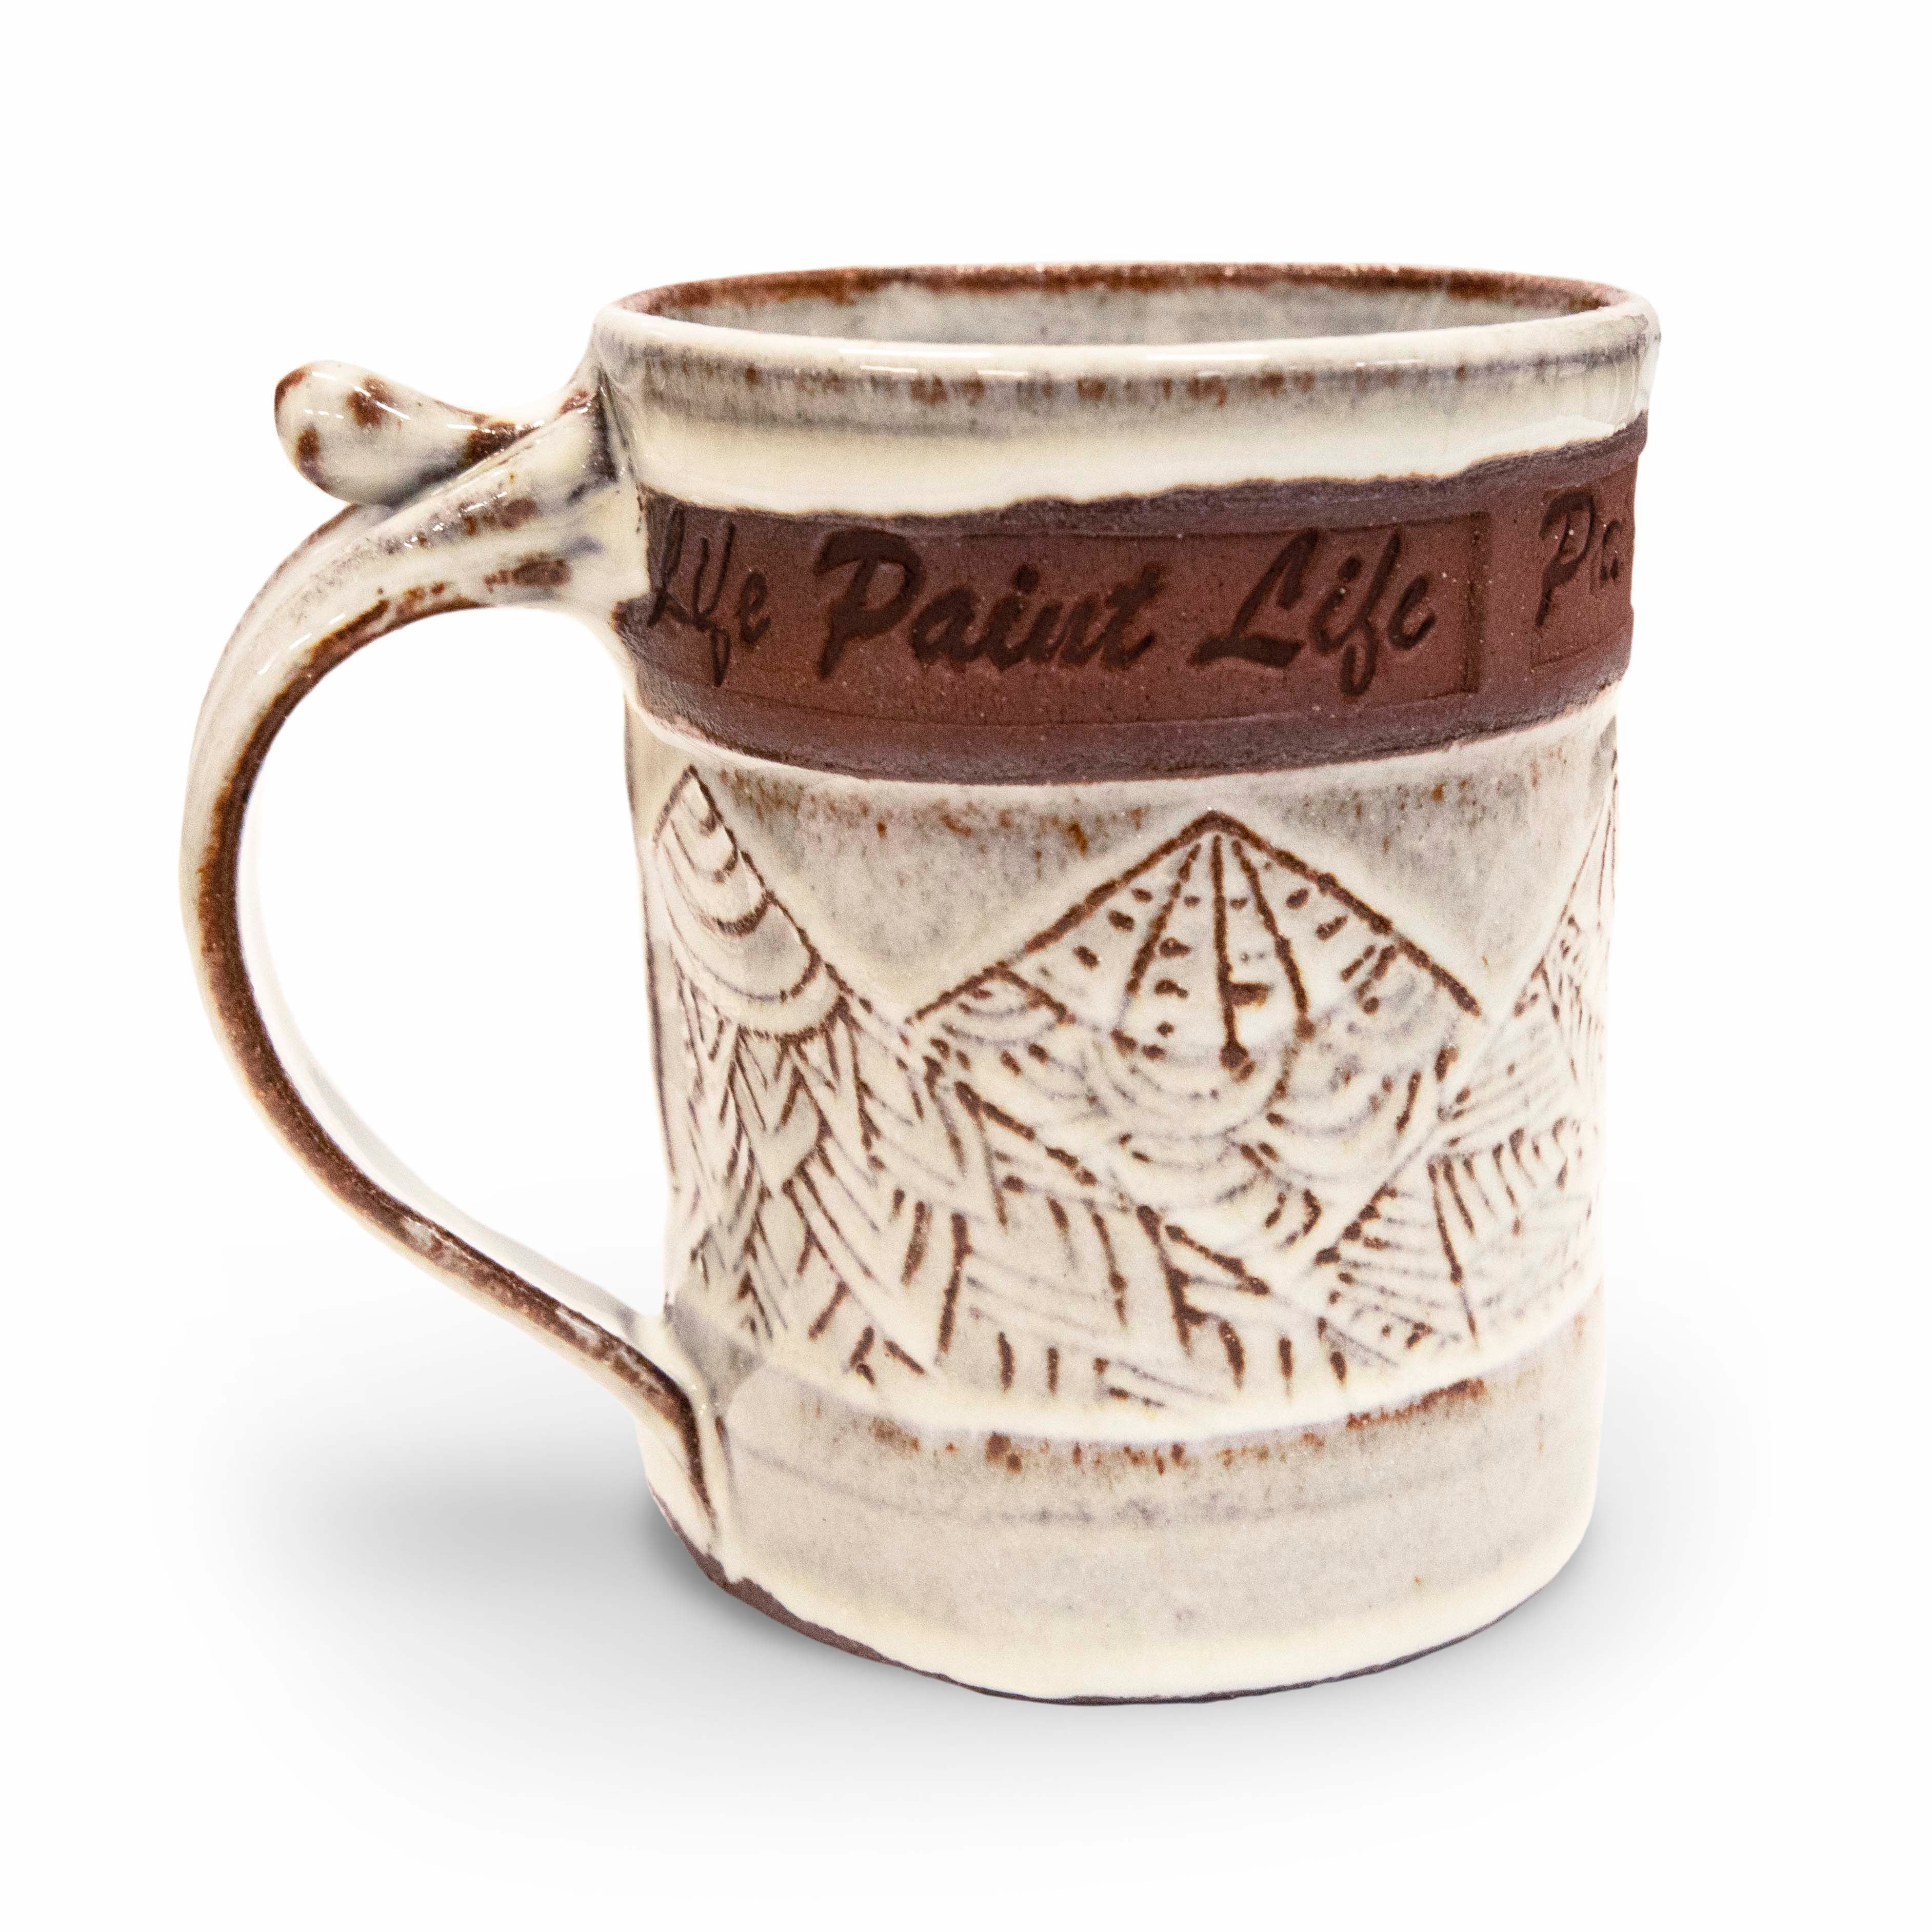 Paint Life Coffee Mug (clearance)